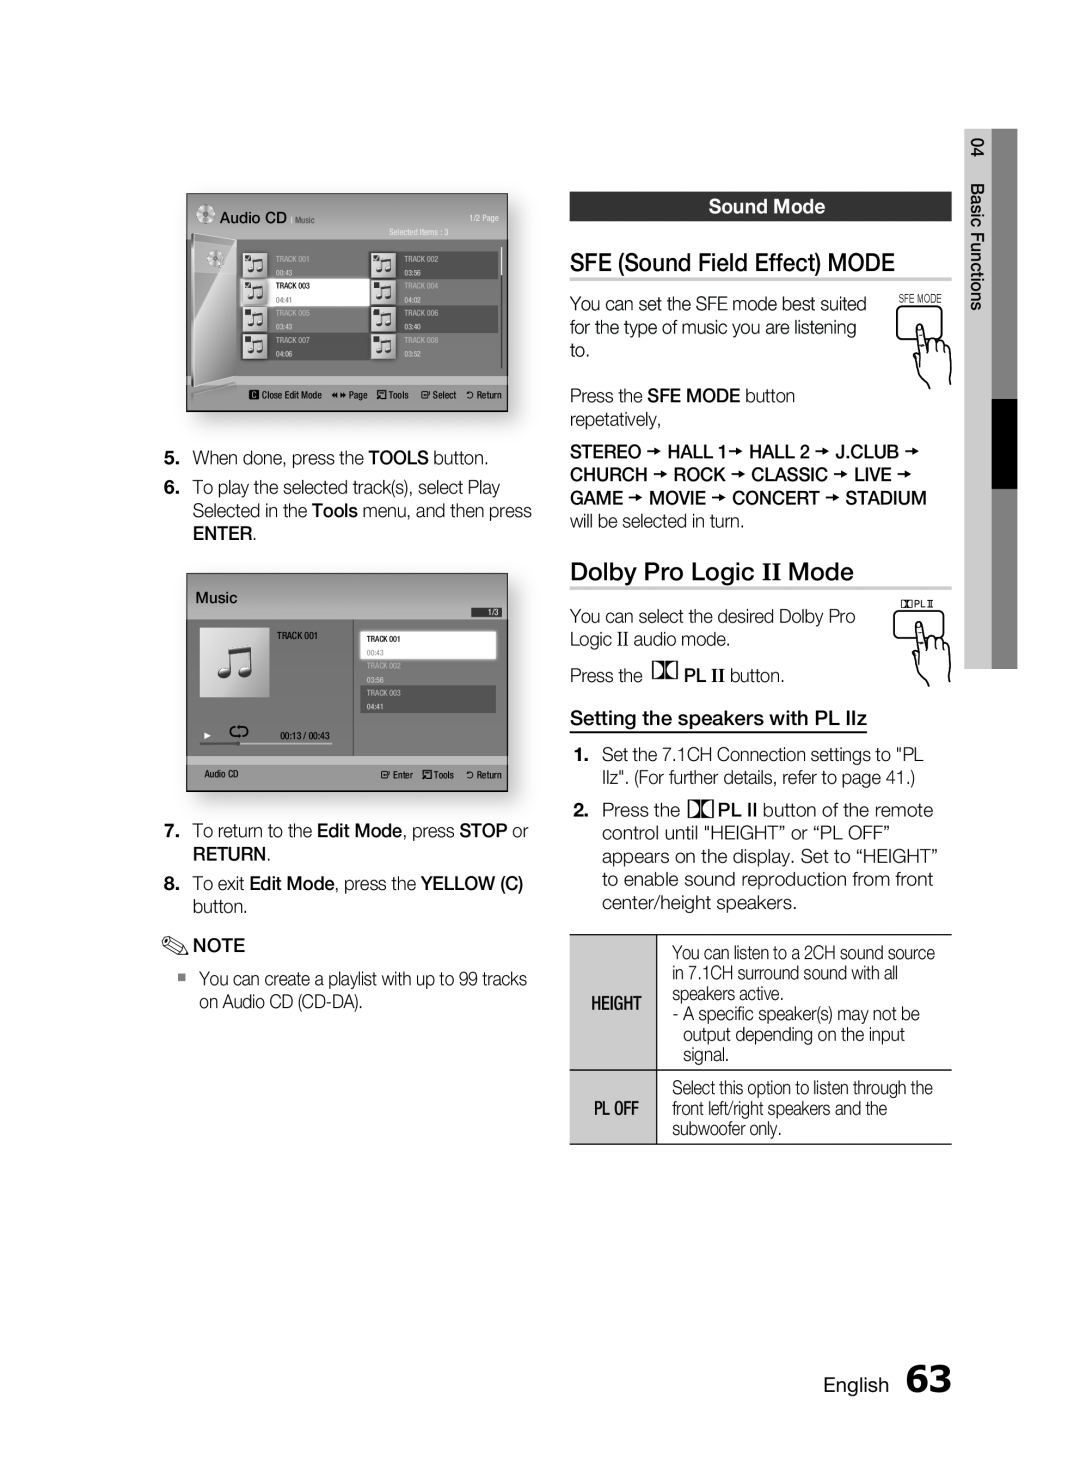 Samsung HW-D7000 user manual SFE Sound Field Effect MODE, Dolby Pro Logic II Mode, Sound Mode 